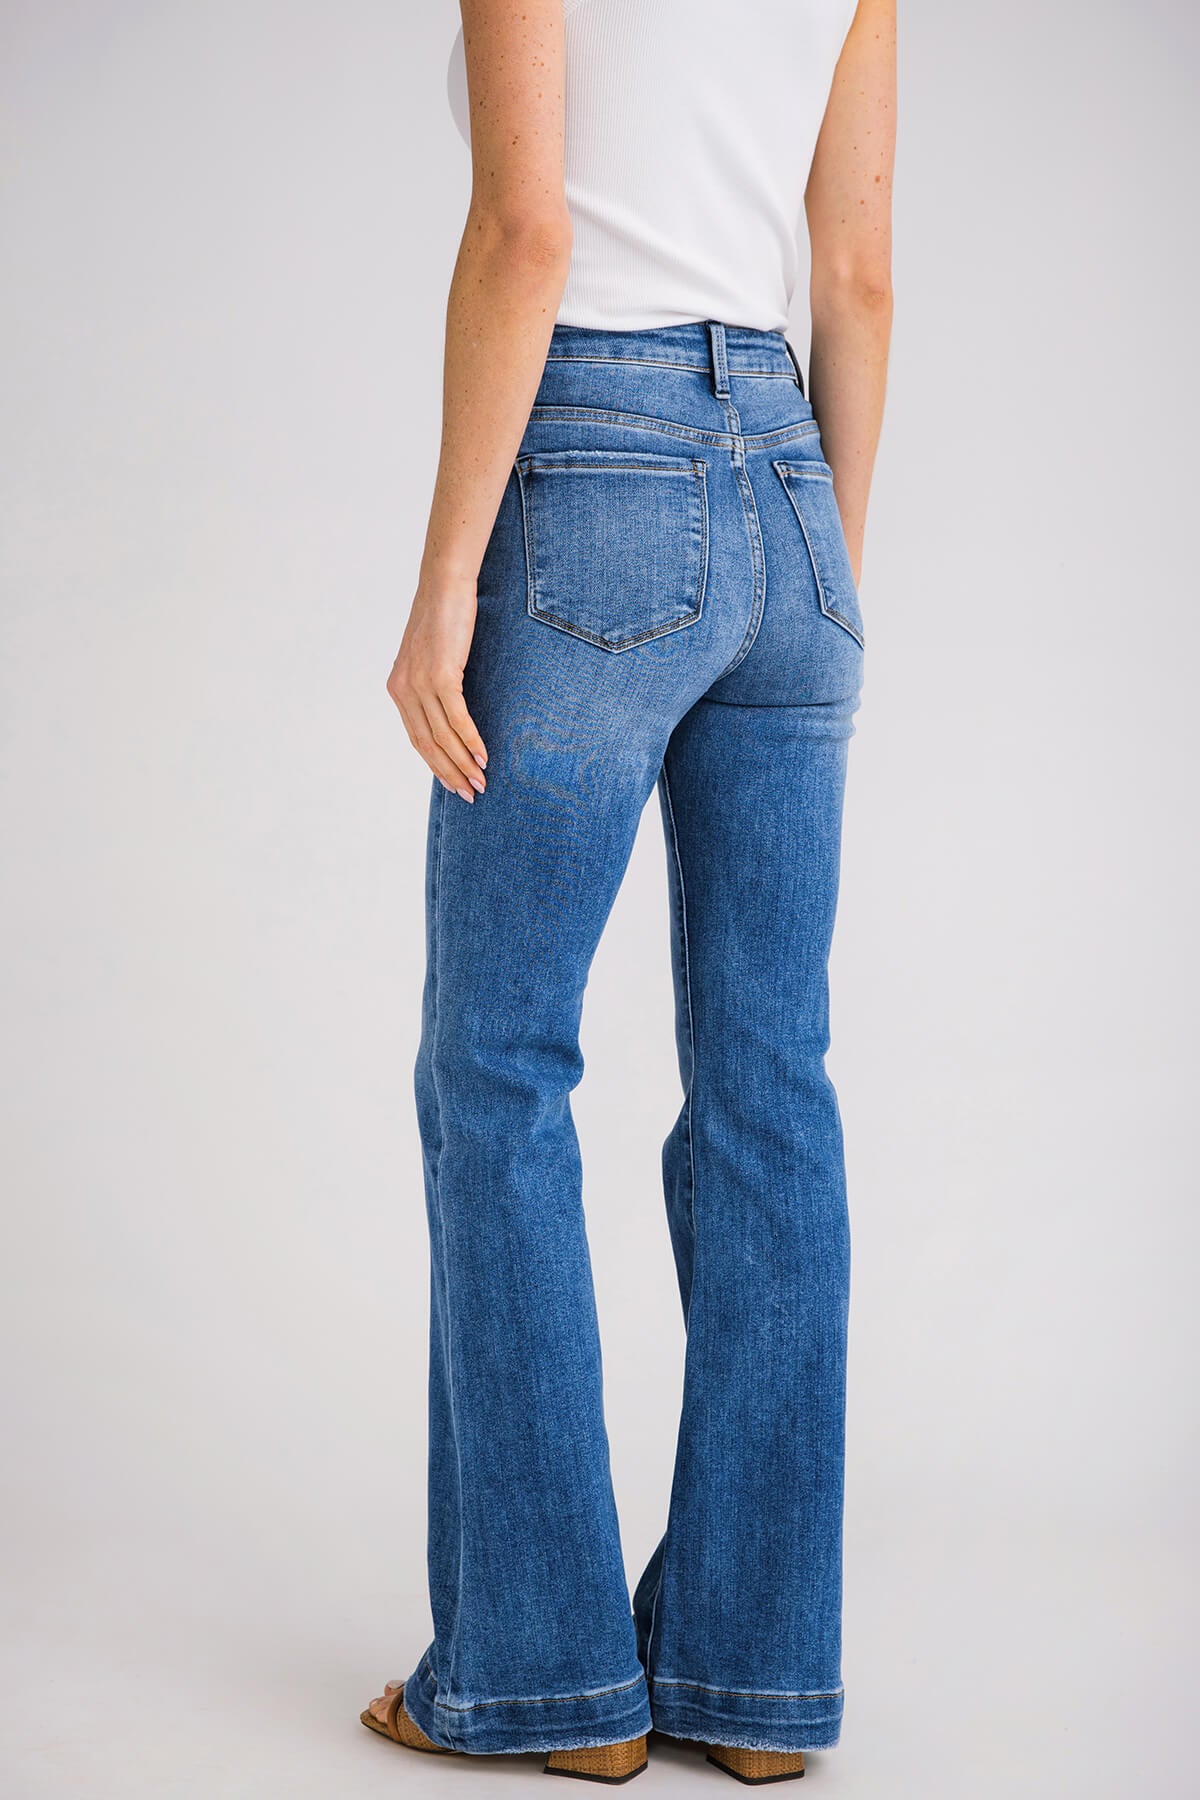 Risen Sedona Patch Pocket Jeans